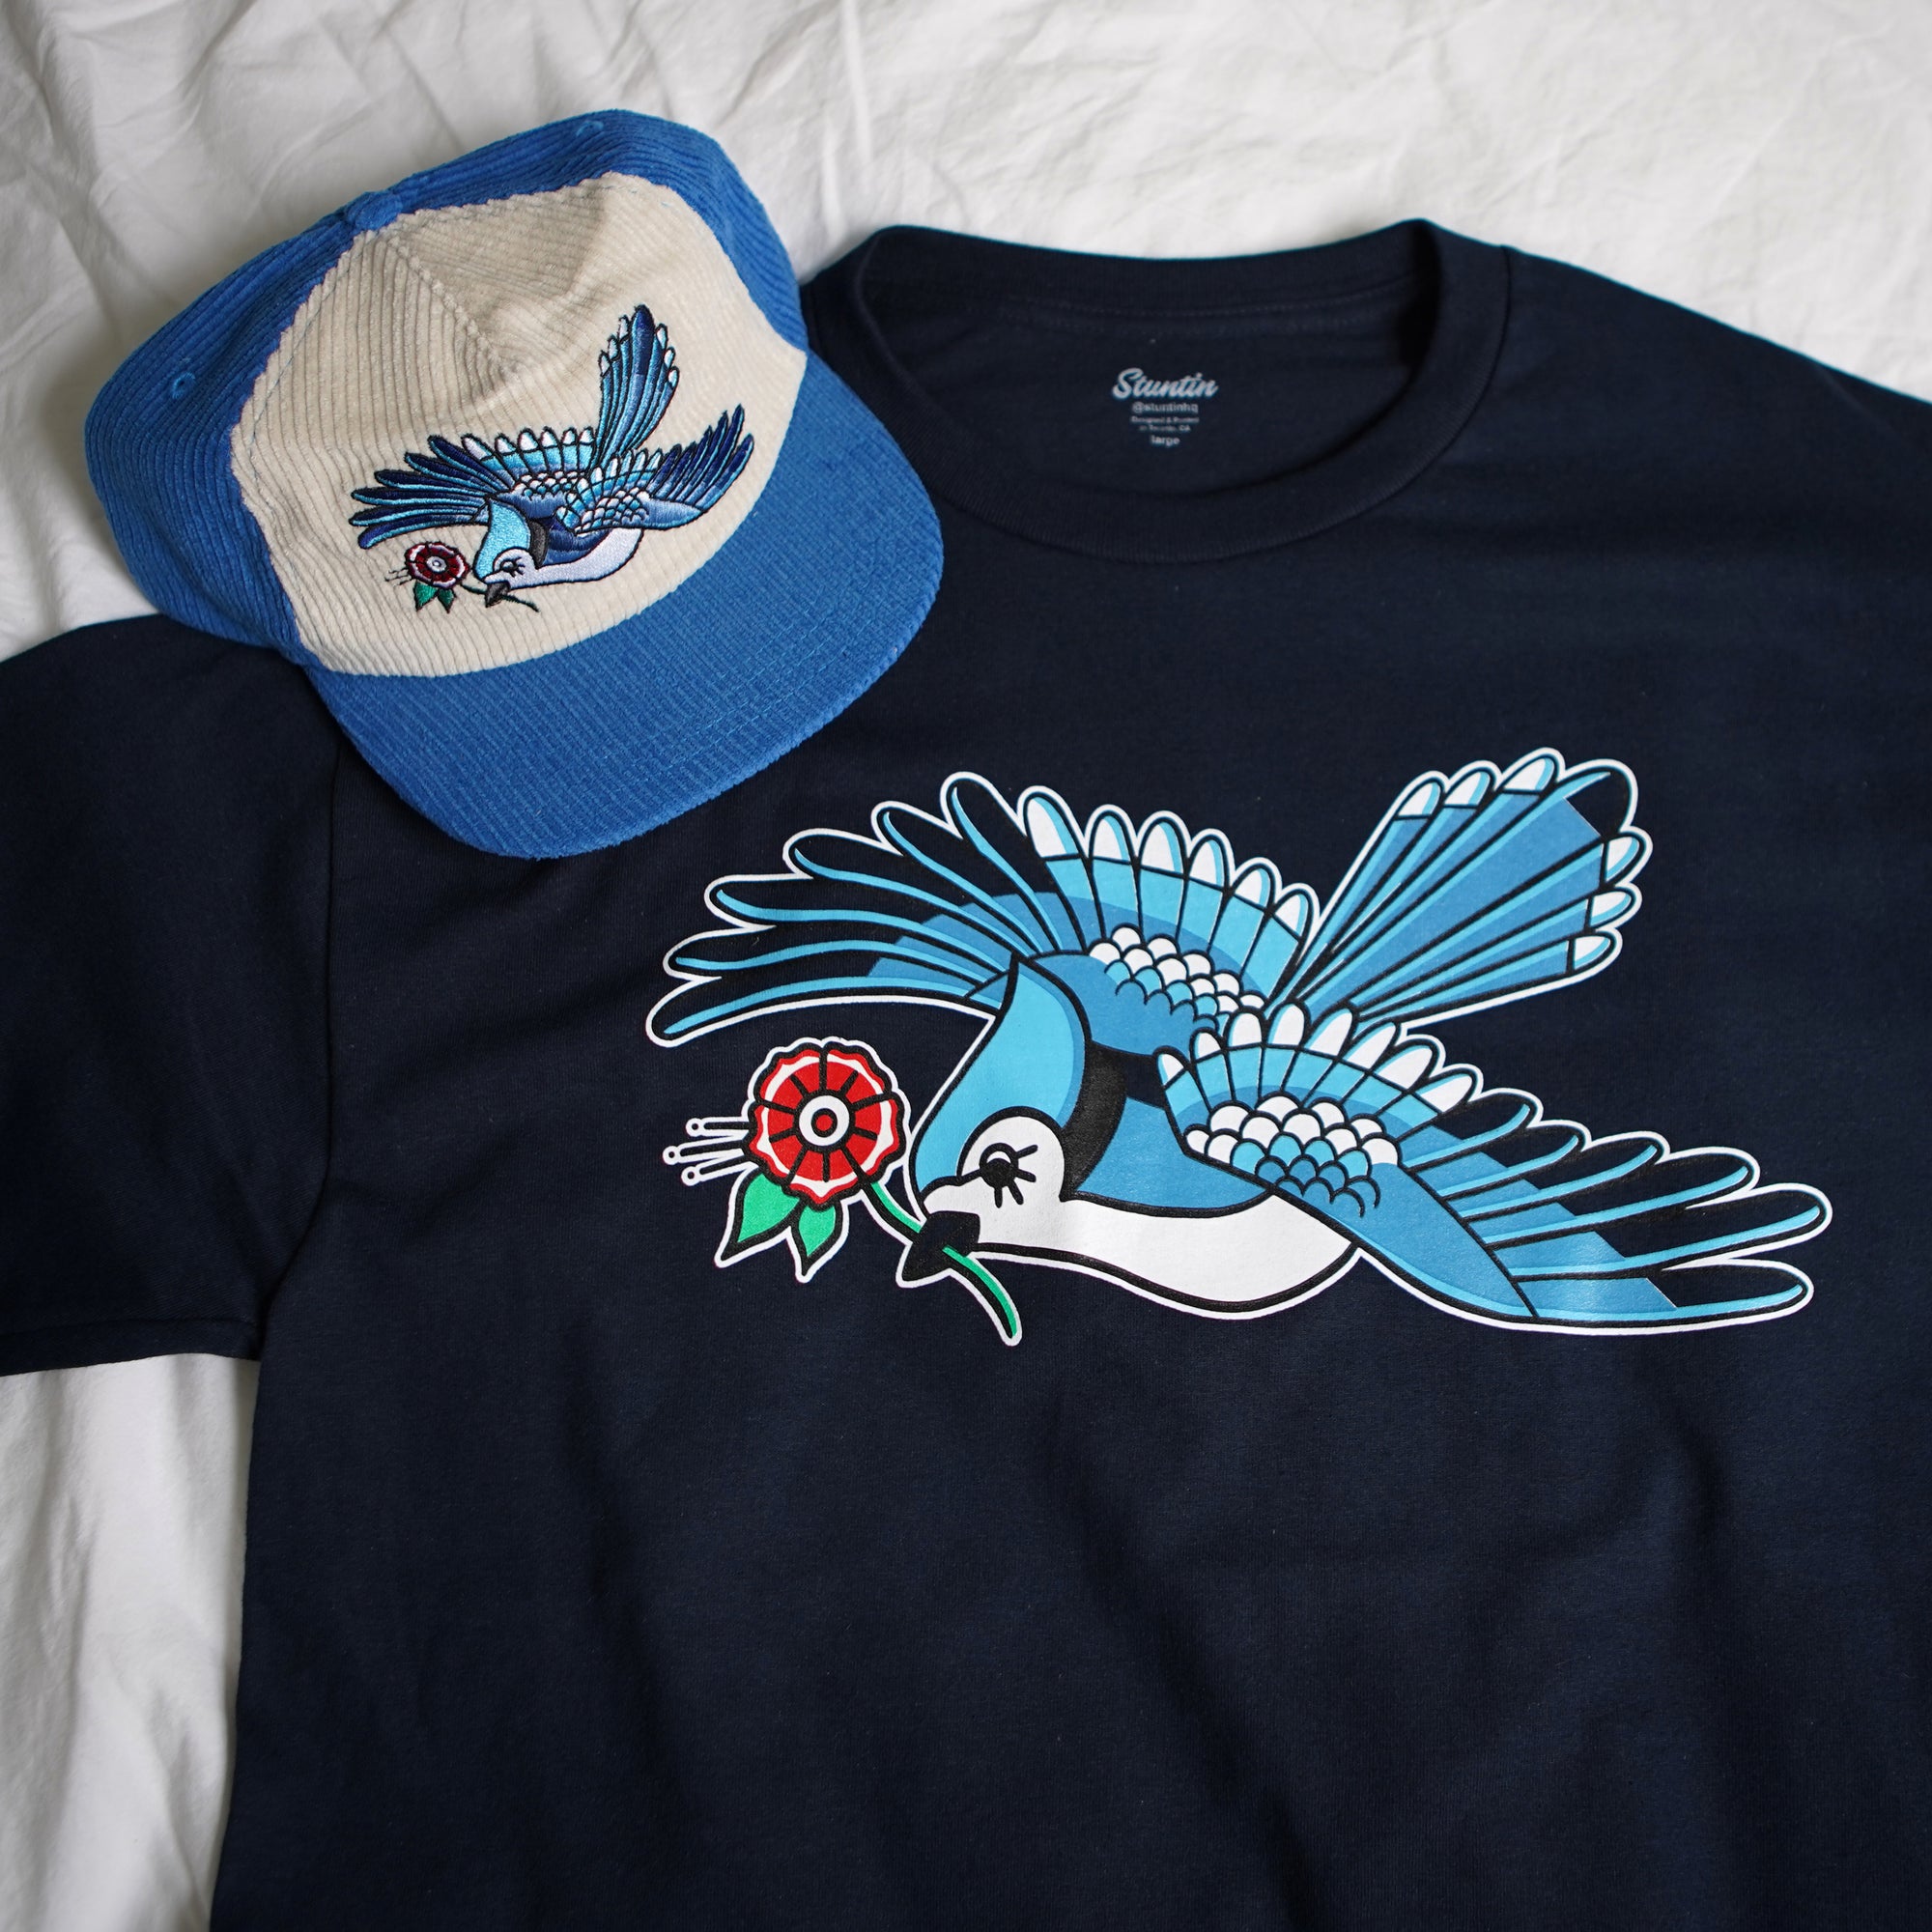 Blue Jay Shirt - Stuntin Goods